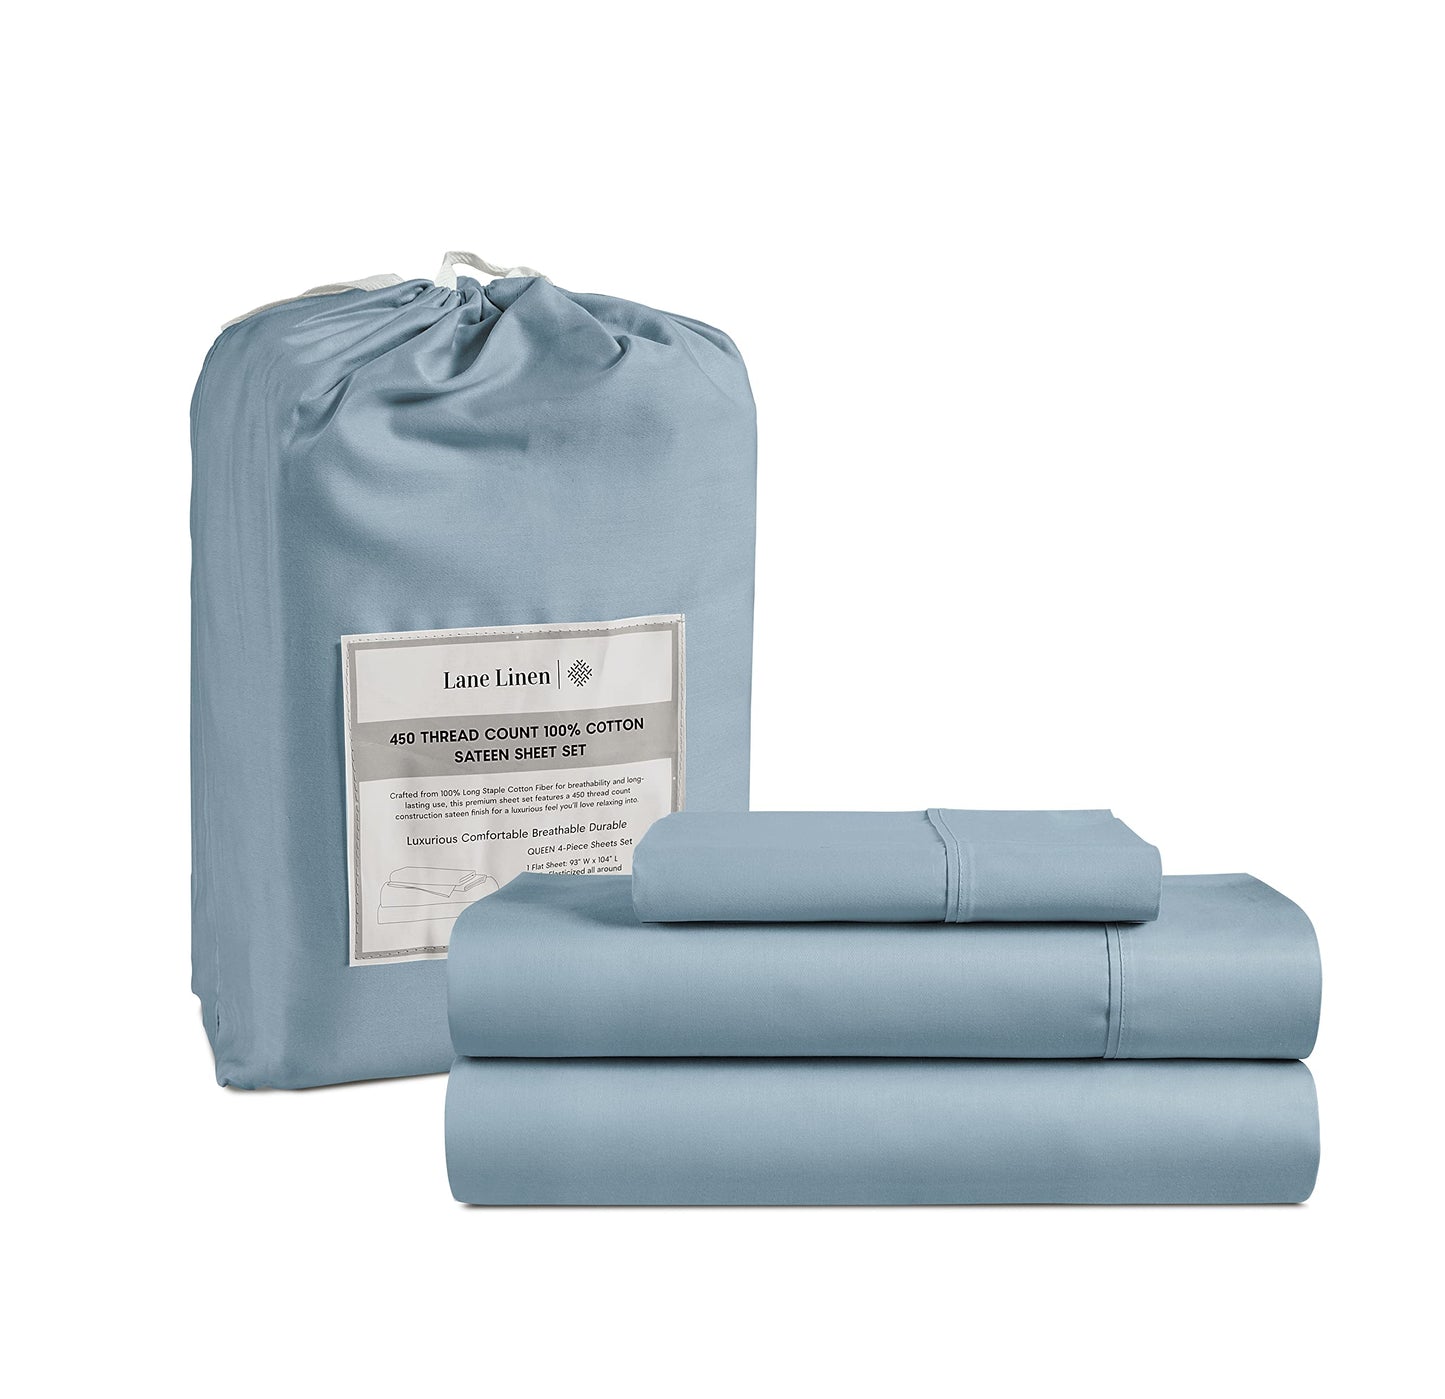 LANE LINEN Twin XL Sheet Sets - 3 Pc Twin XL Sheet Set, Luxury Sateen Sheets, 450 Thread Count 100% Cotton Twin XL Bed Sheets, Extra Long Twin Bed Sheets, Breathable Cotton Sheets - French Blue